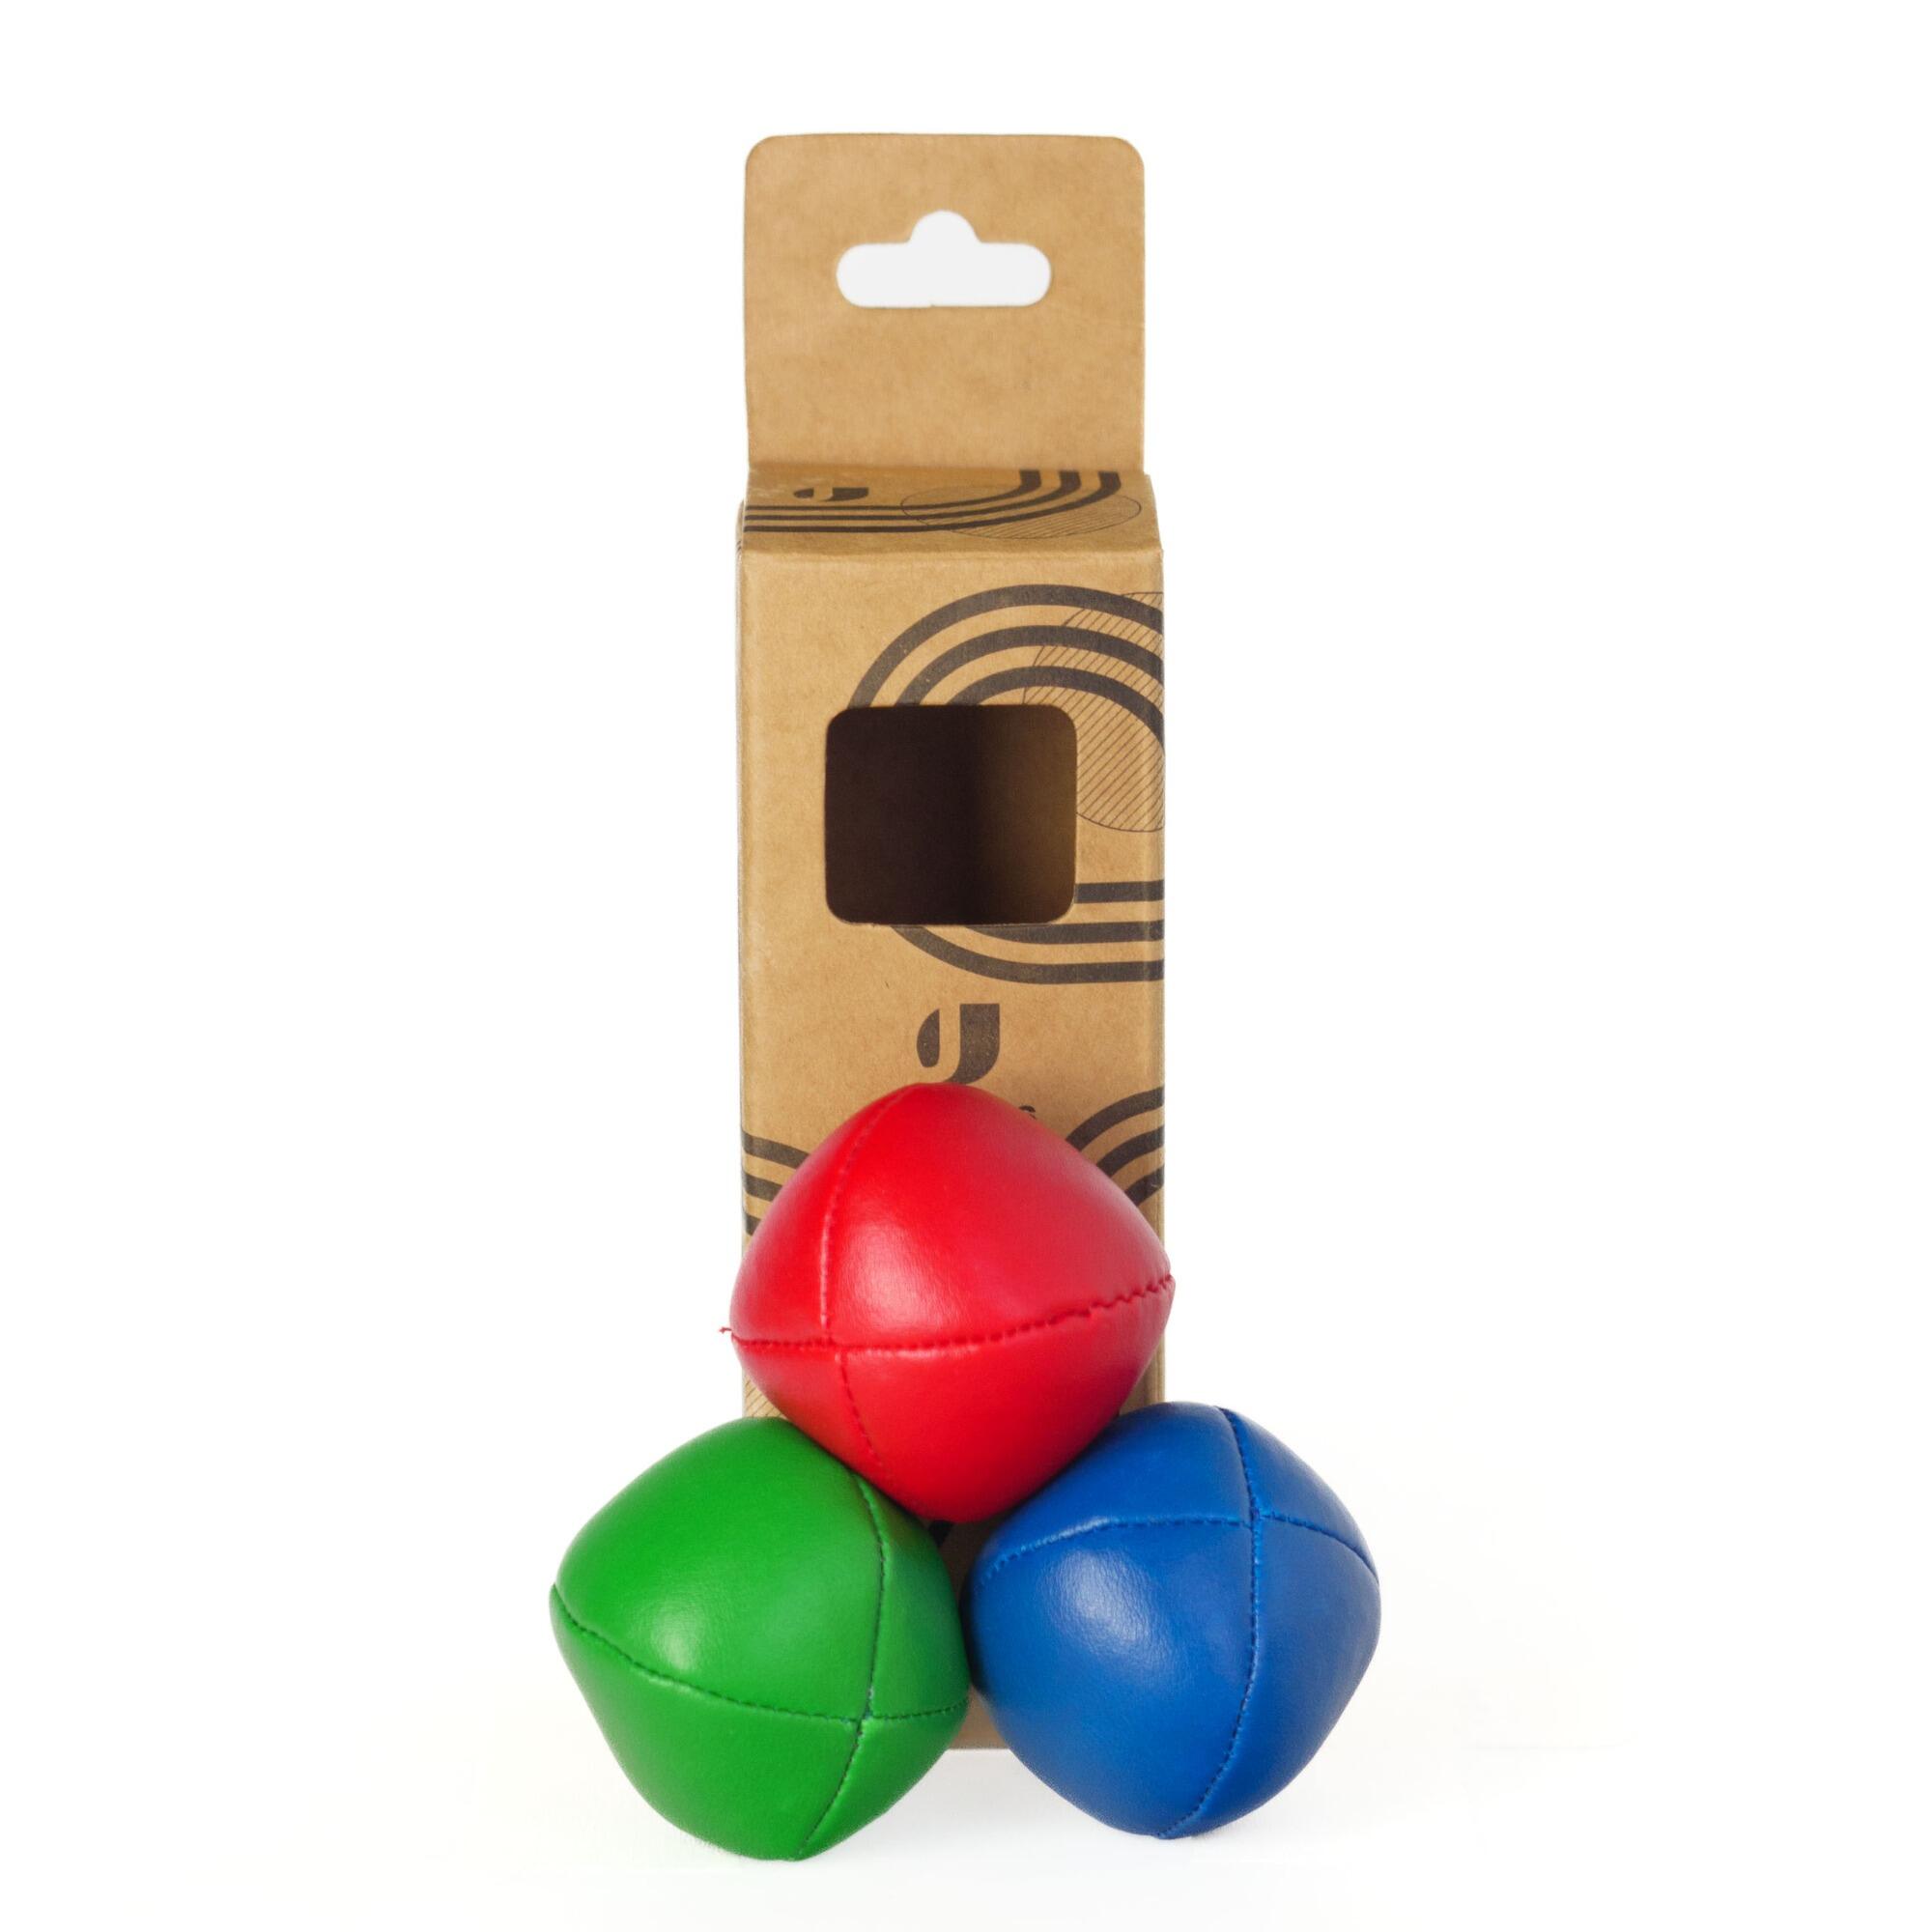 Firetoys Juggling - 70g Thud - Set of 3x Juggling Balls 1/1